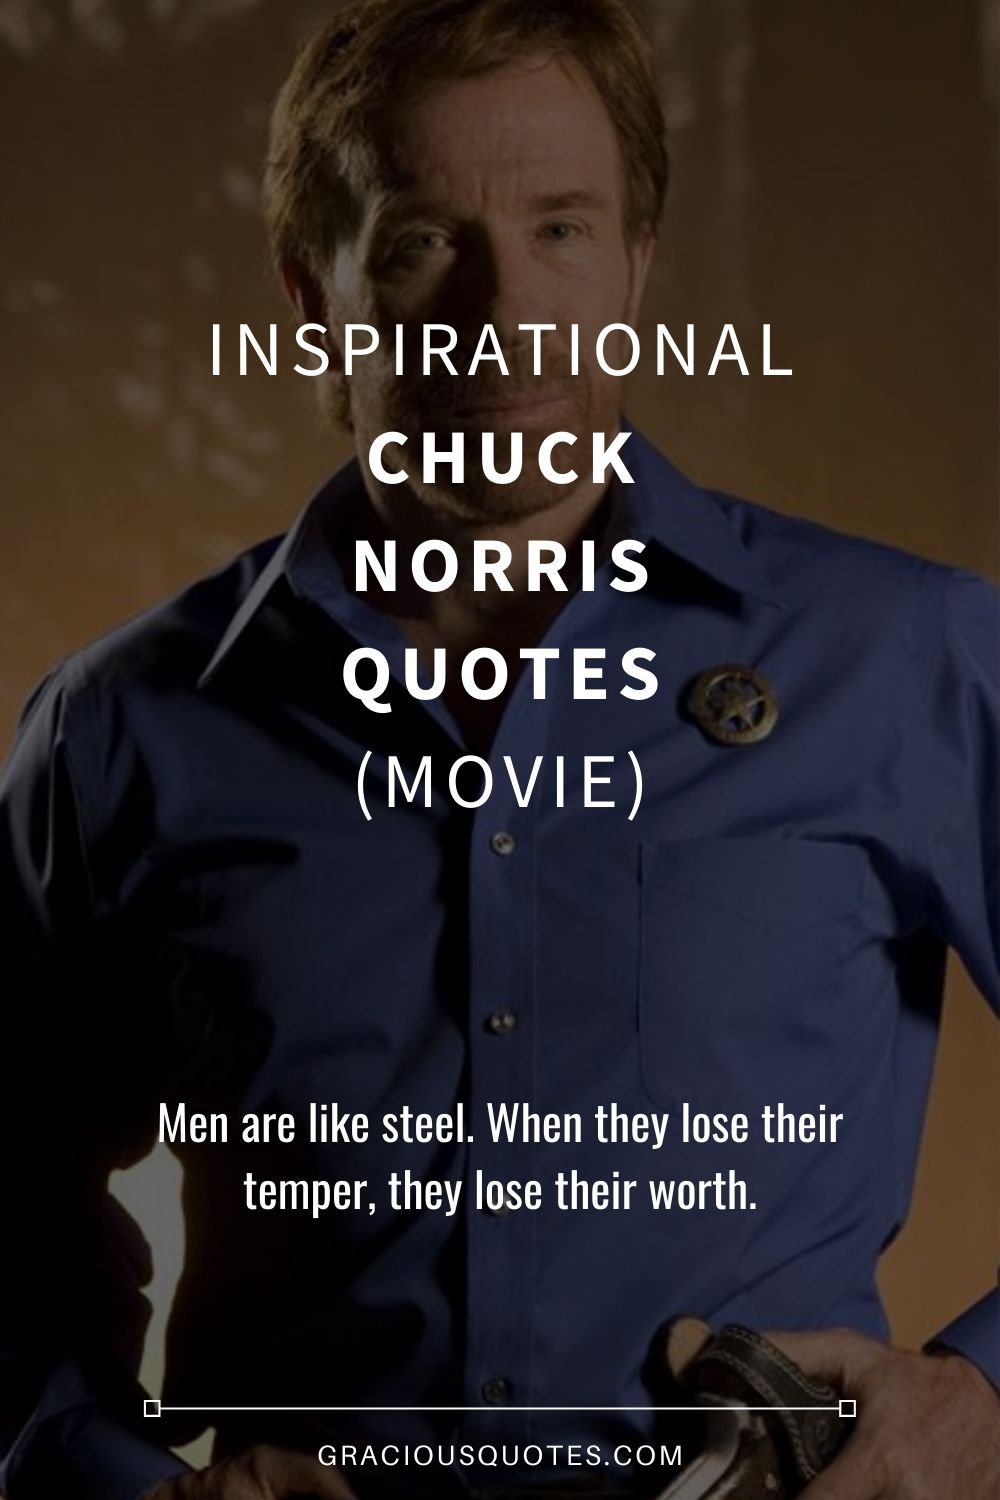 Inspirational Chuck Norris Quotes (MOVIE) - Gracious Quotes